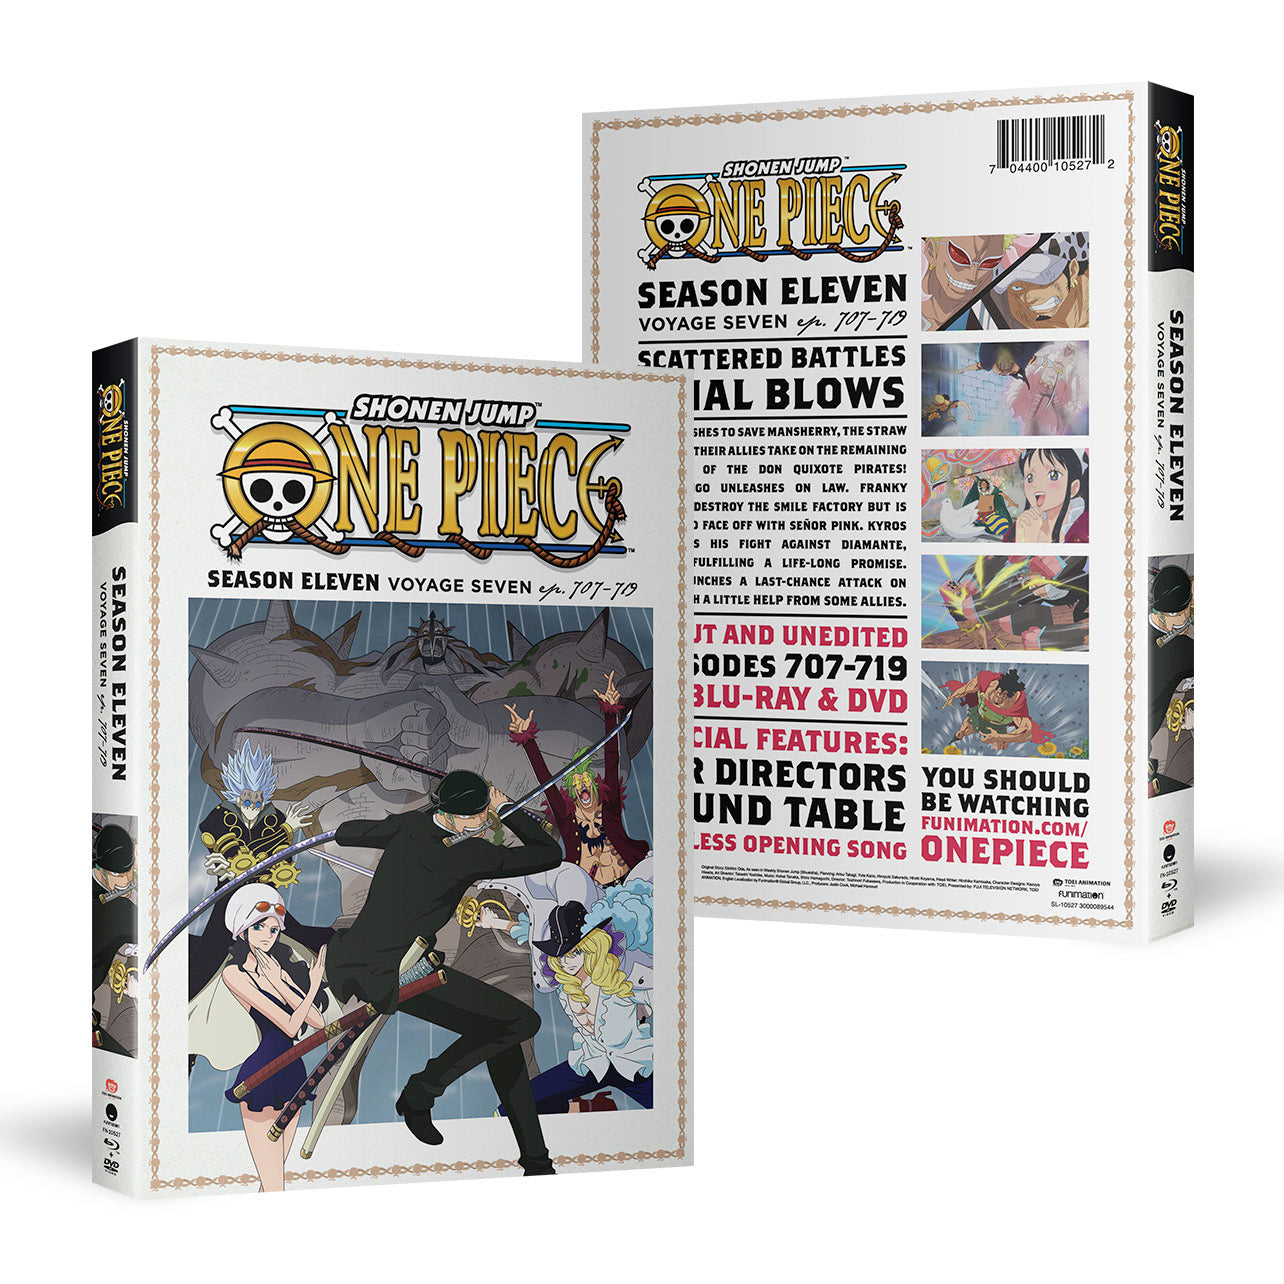 One Piece - Season 11 Voyage 7 - BD/DVD image count 0